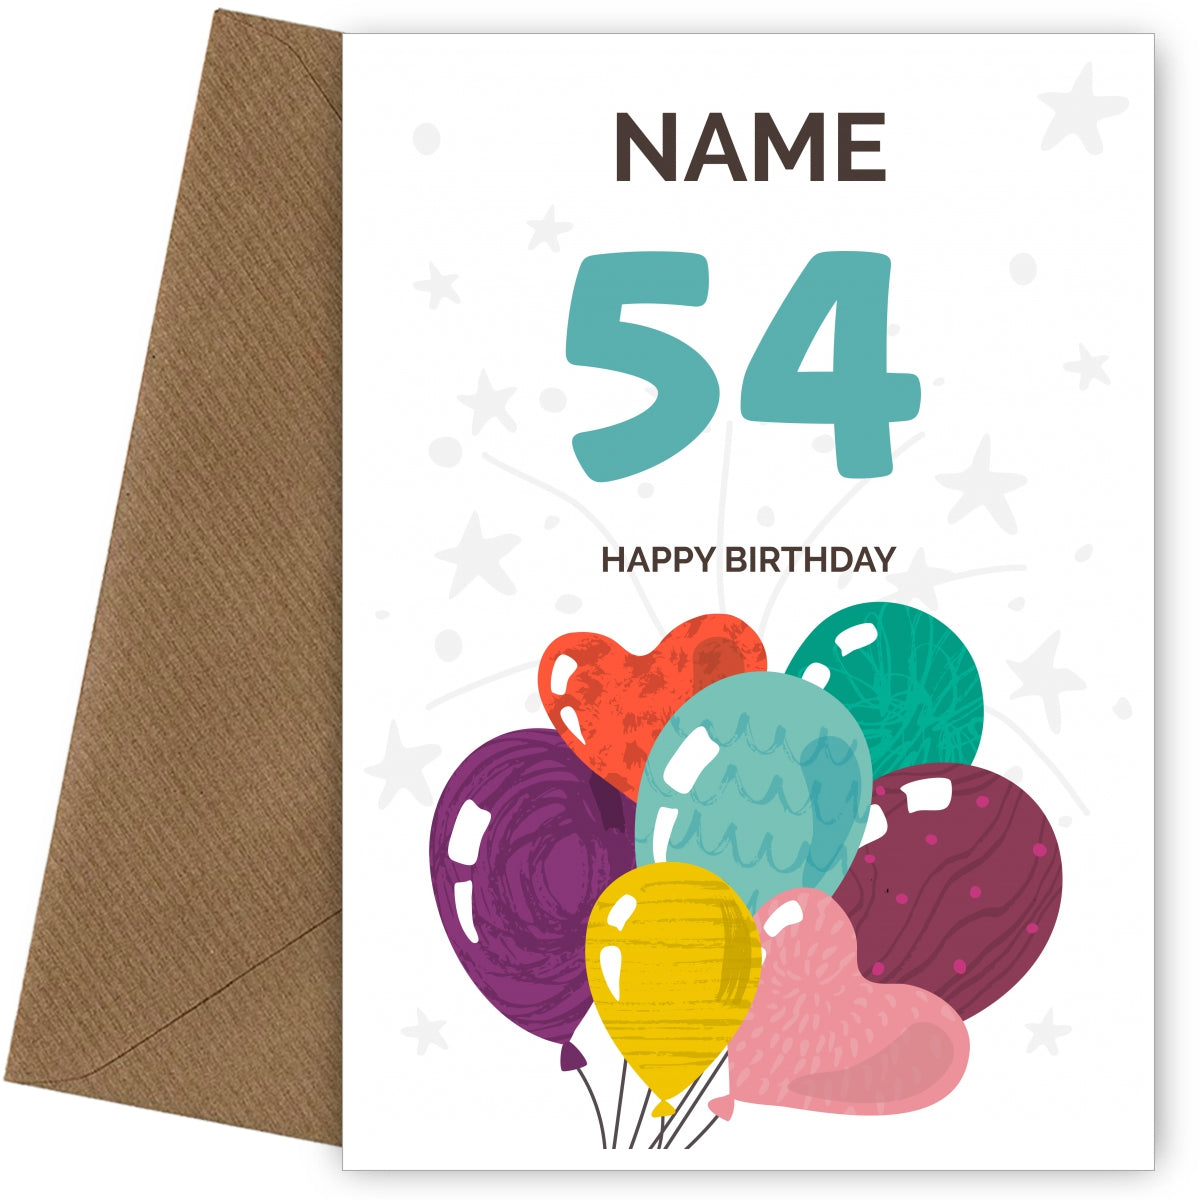 Happy 54th Birthday Card - Fun Balloons Design